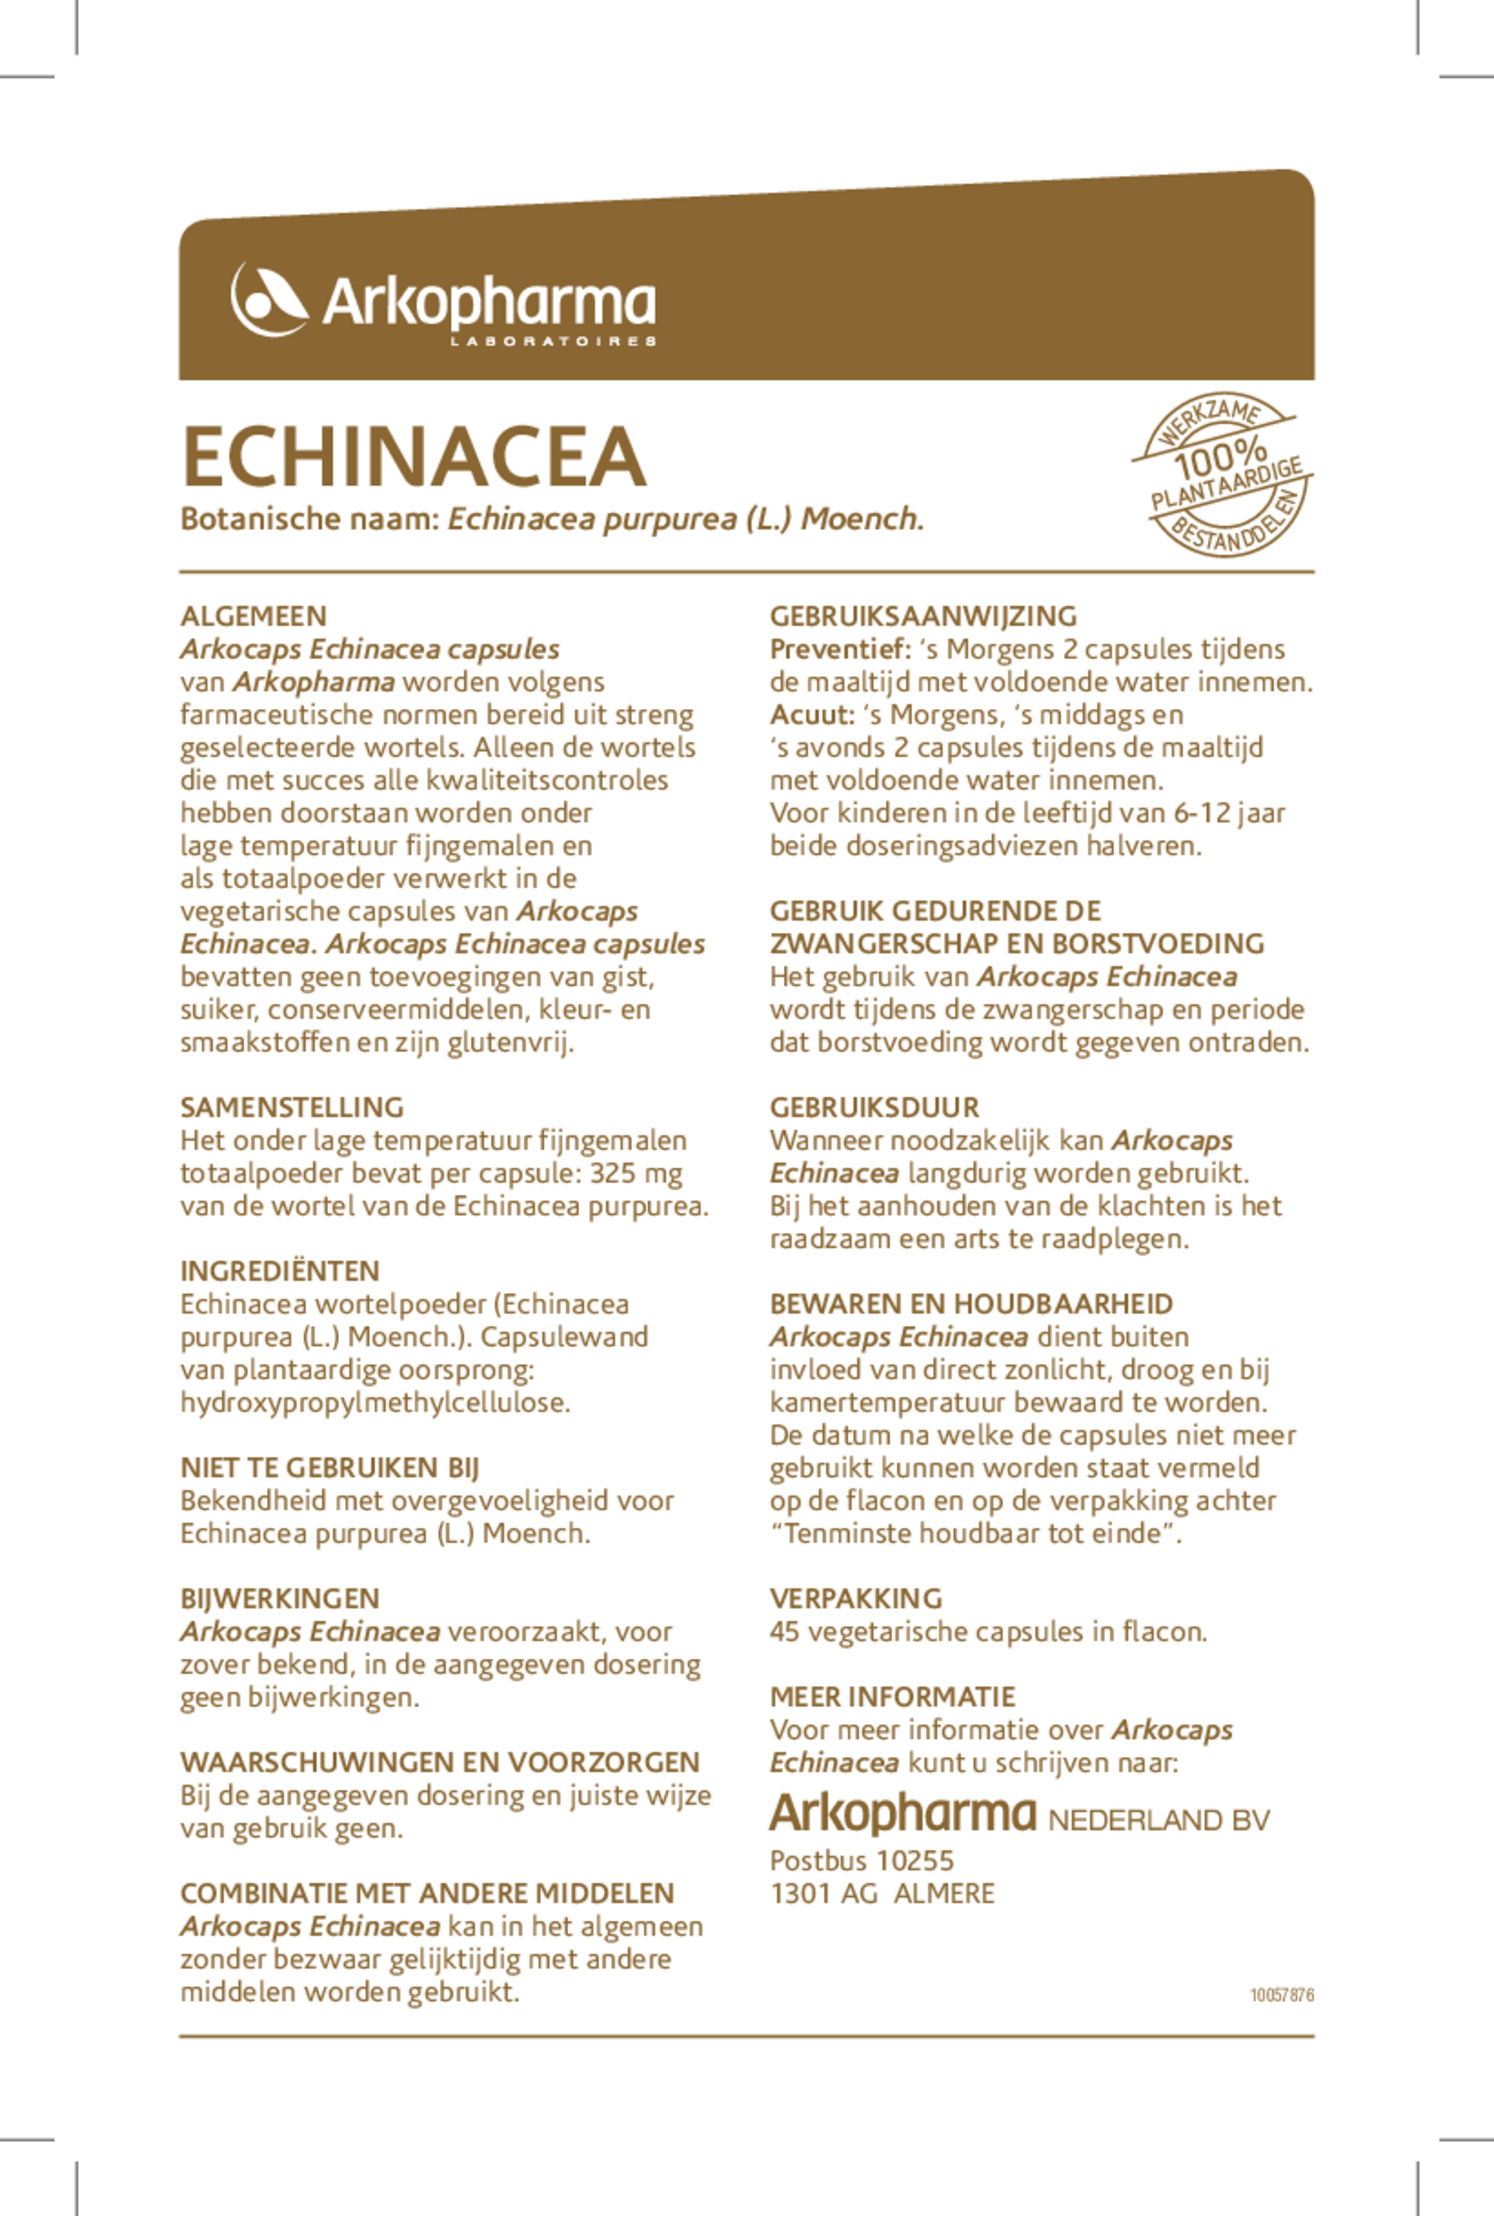 Echinacea Capsules afbeelding van document #1, gebruiksaanwijzing